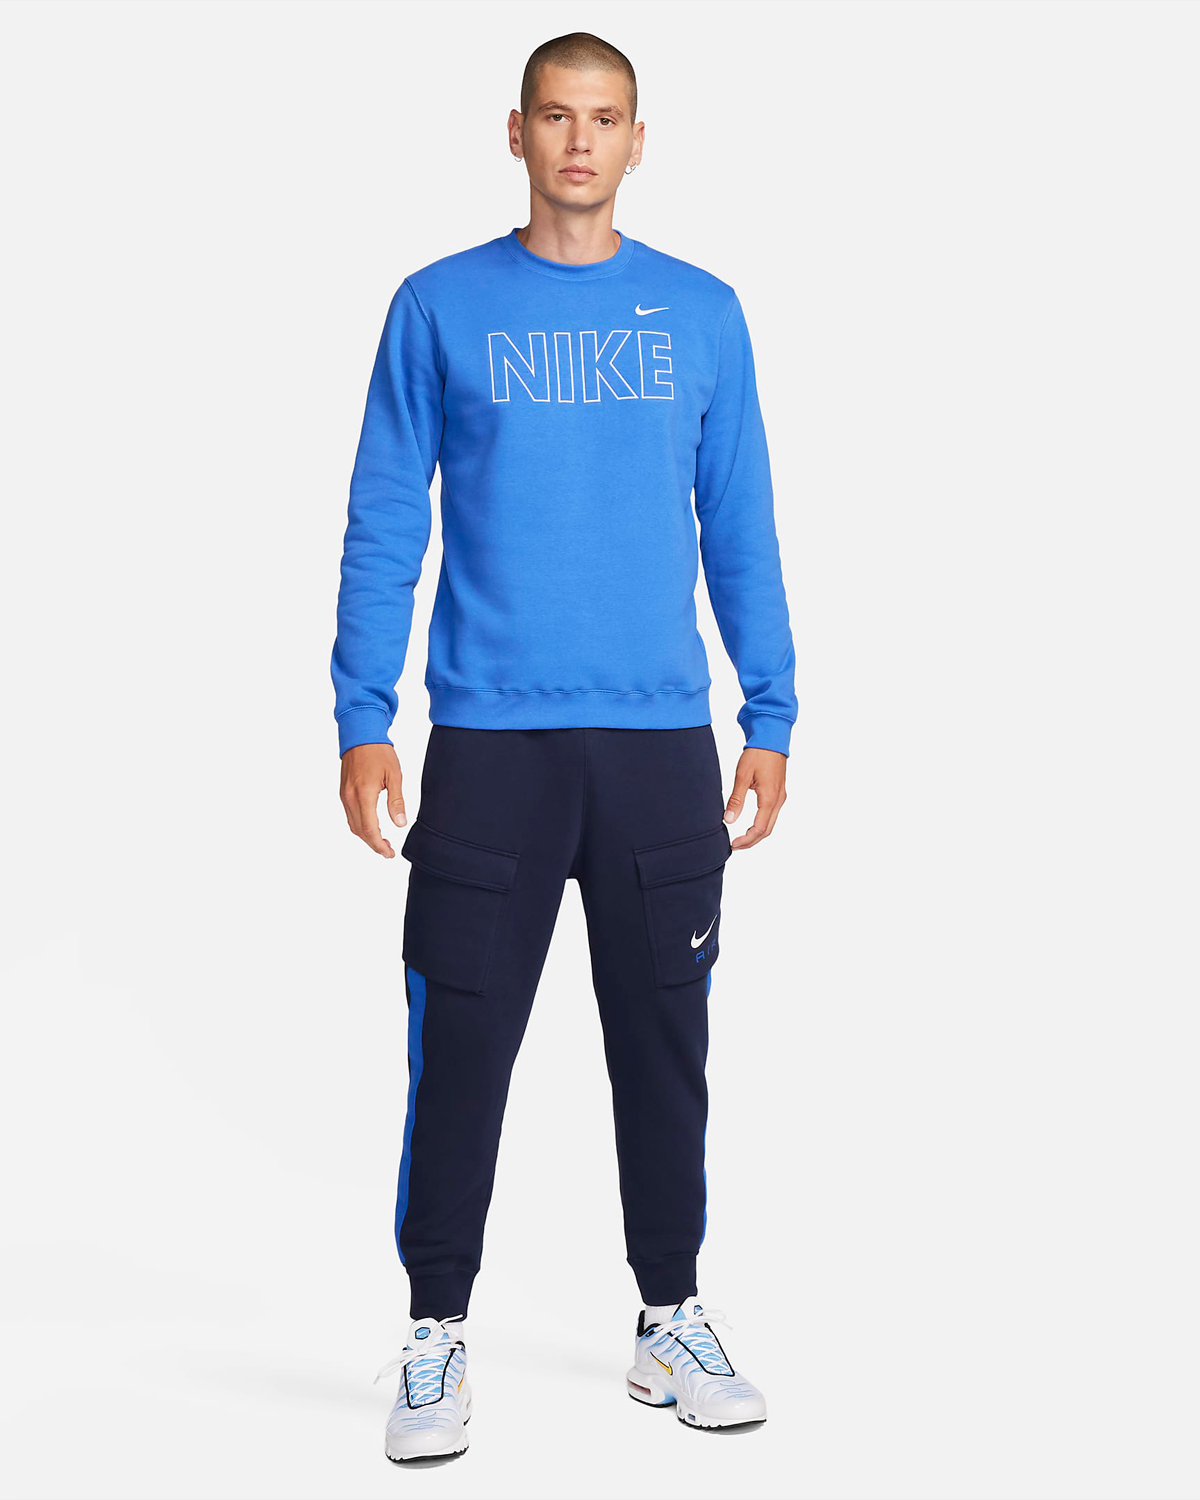 Nike-Sportswear-Club-Fleece-Crew-Neck-Sweatshirt-Game-Royal-Outfit